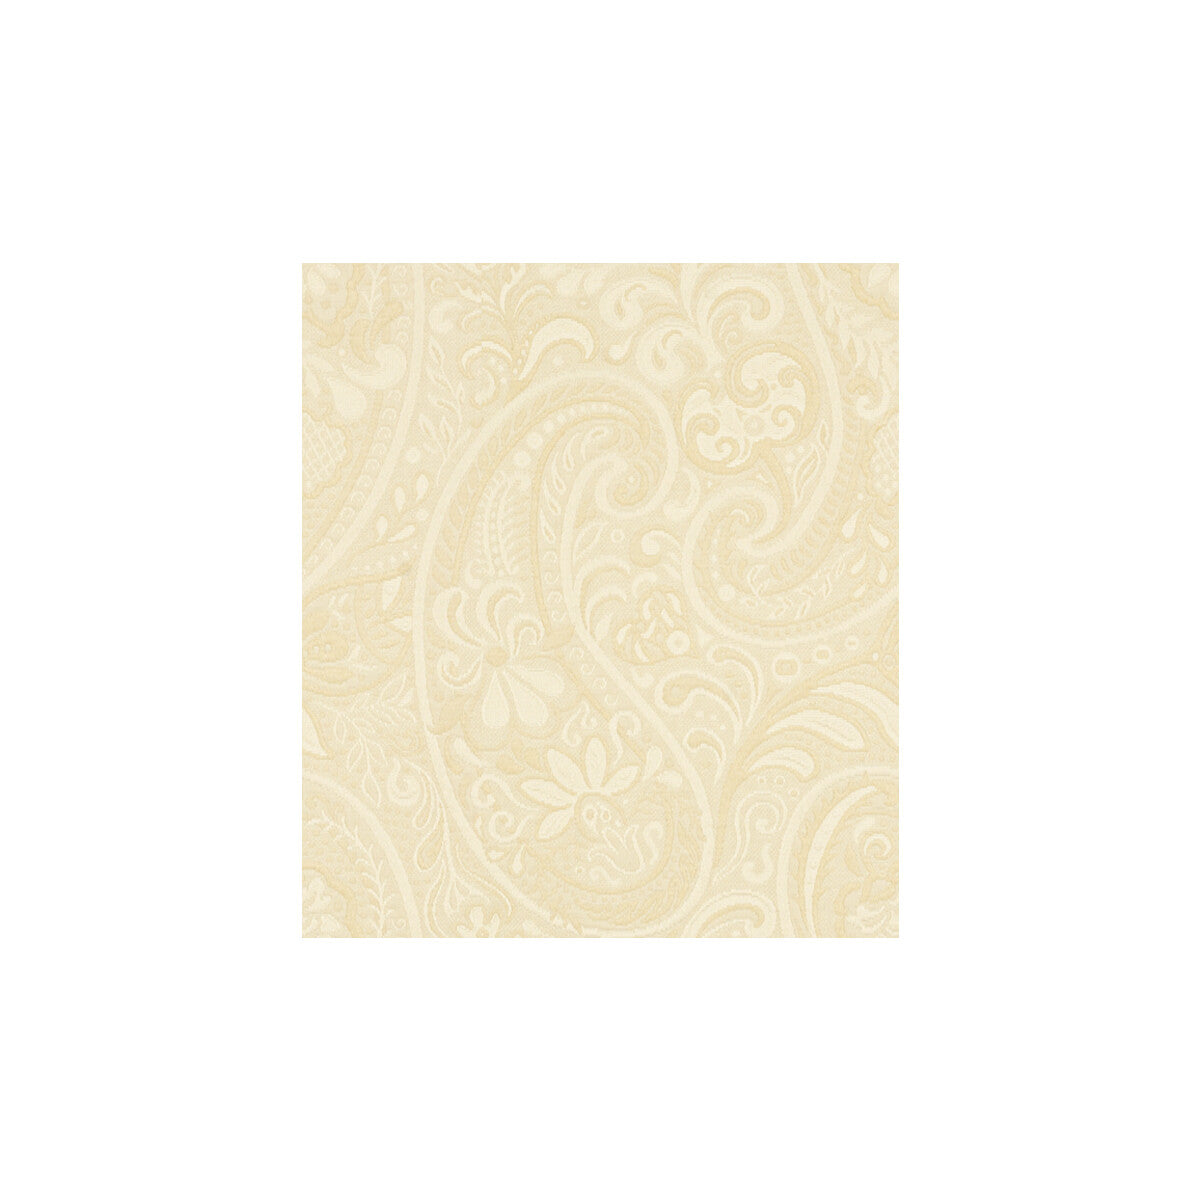 Kravet Design fabric in 31405-1 color - pattern 31405.1.0 - by Kravet Design in the Gis collection